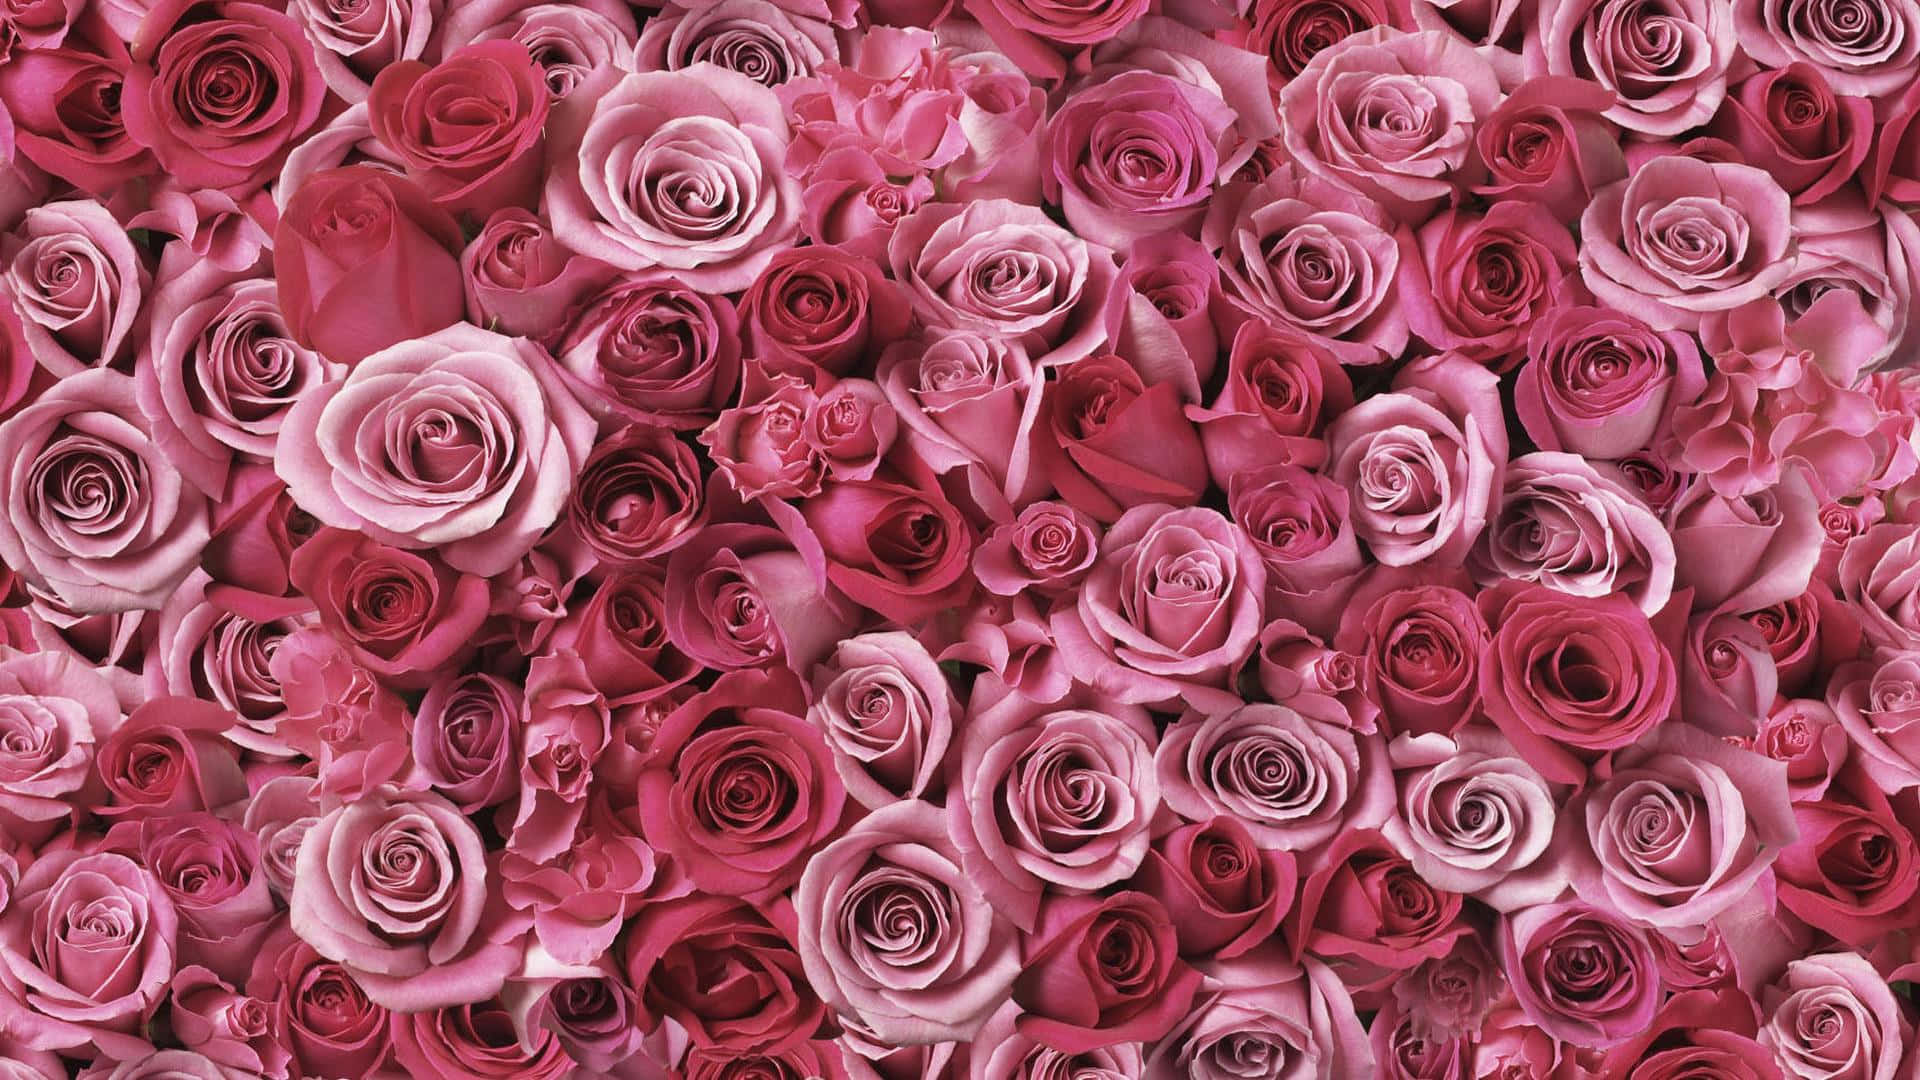 Captivating Rose Art in Full Bloom Wallpaper